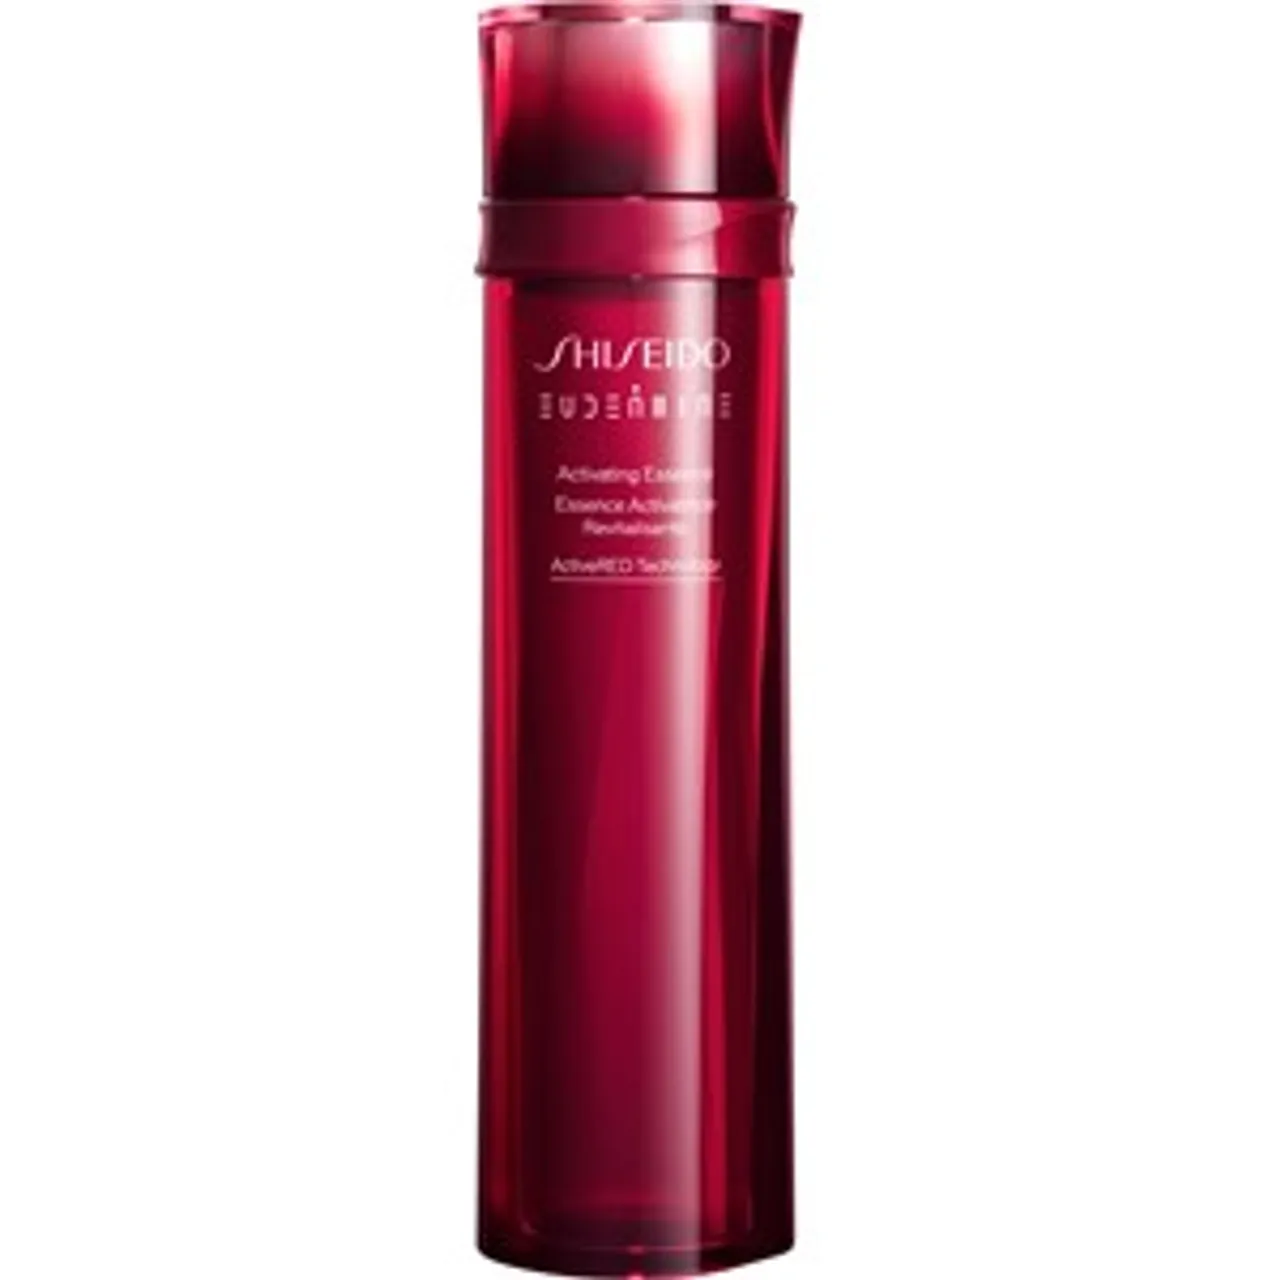 Shiseido Activating Essence 2 145 ml